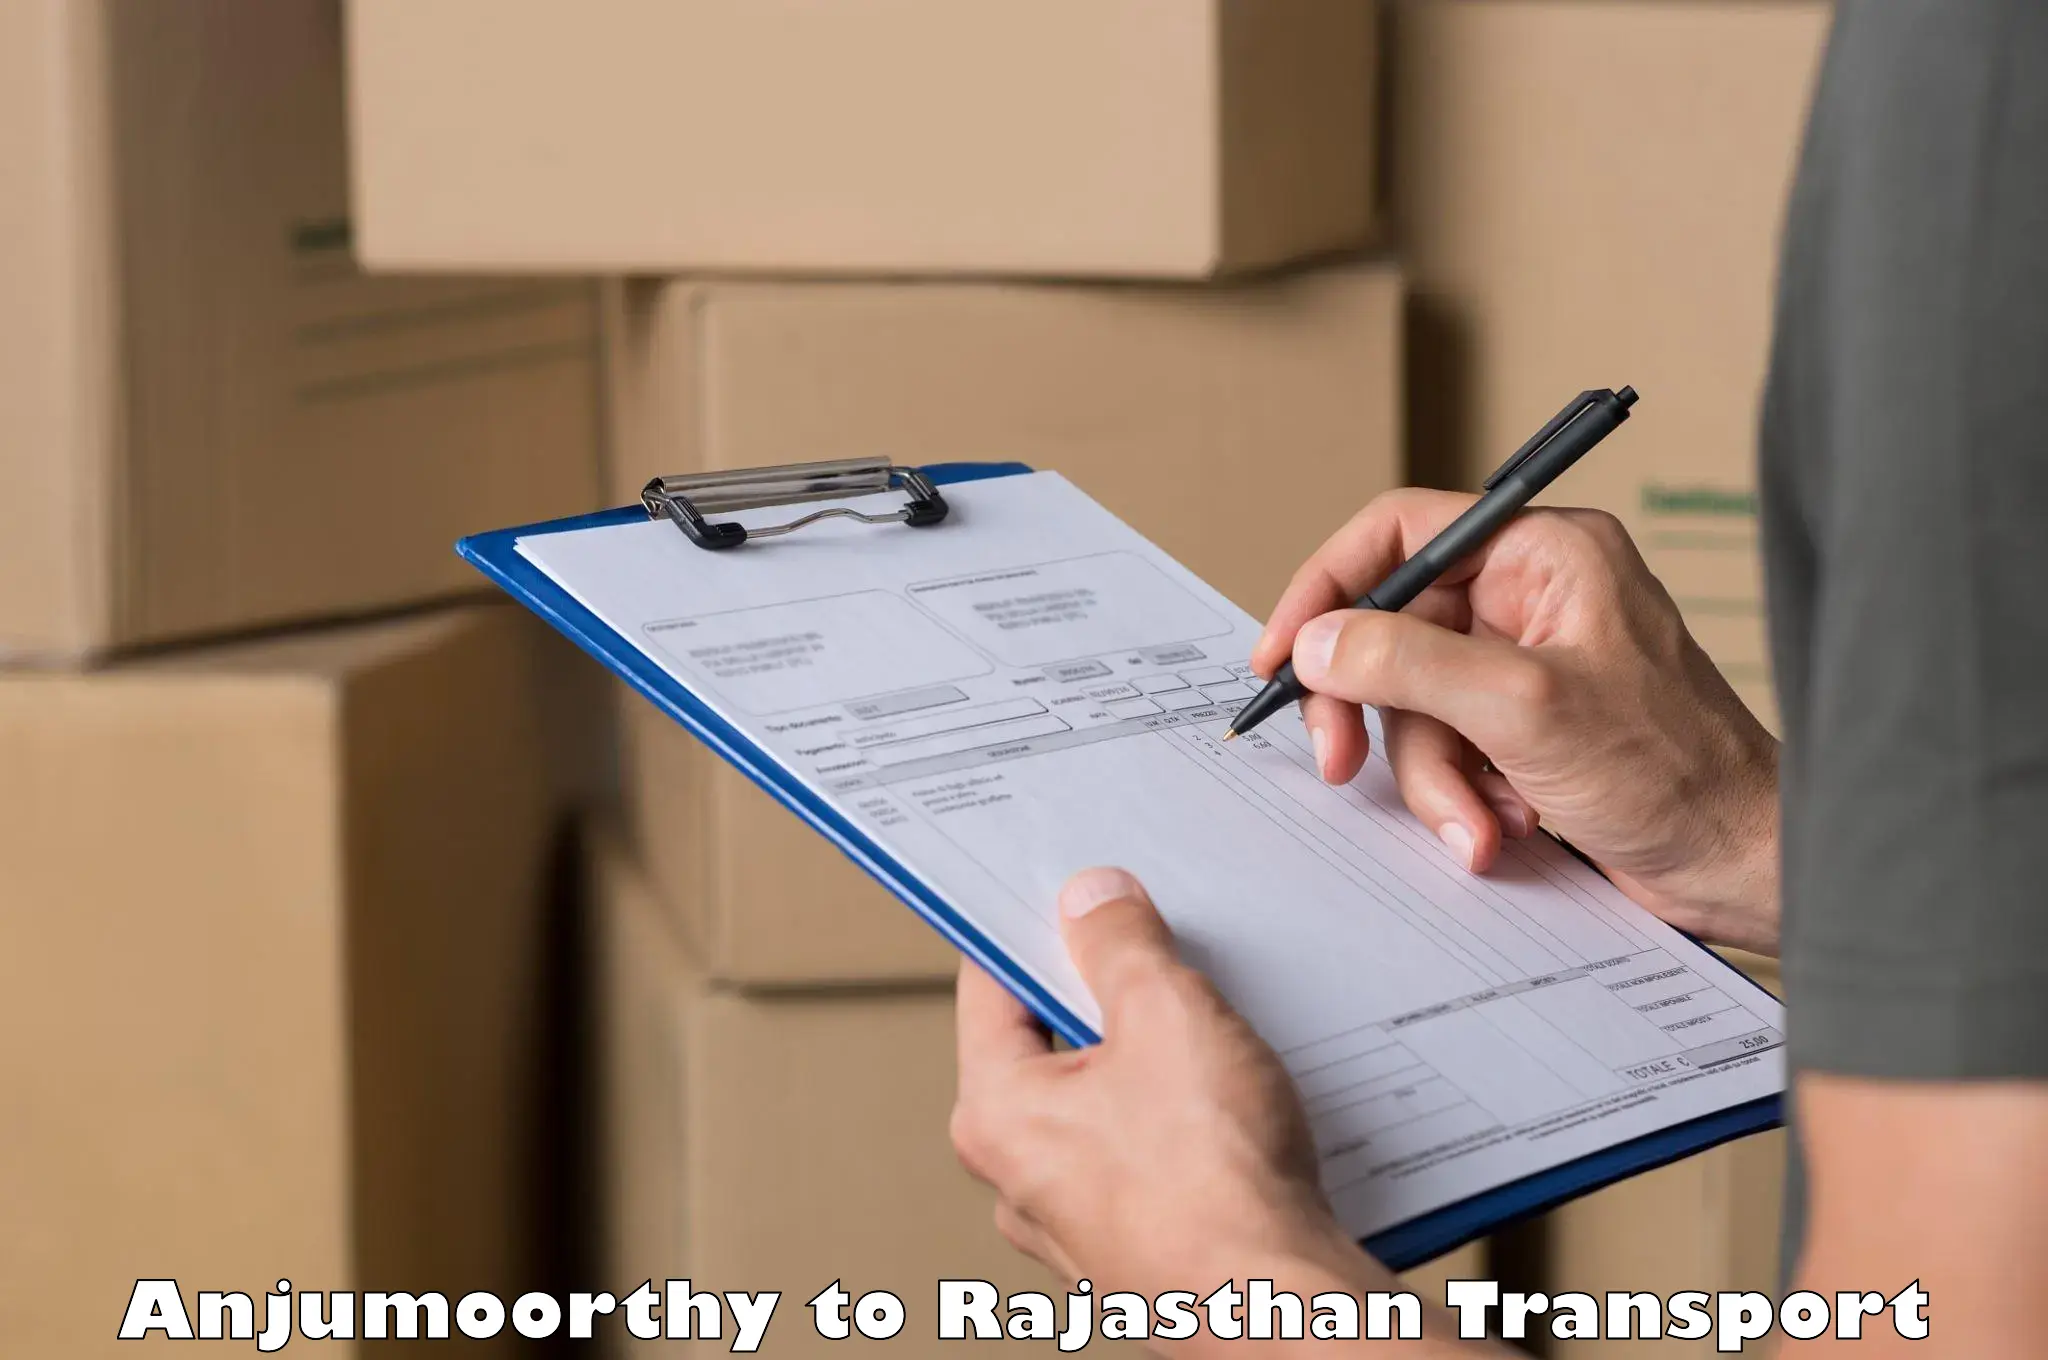 Daily transport service Anjumoorthy to Rajasthan